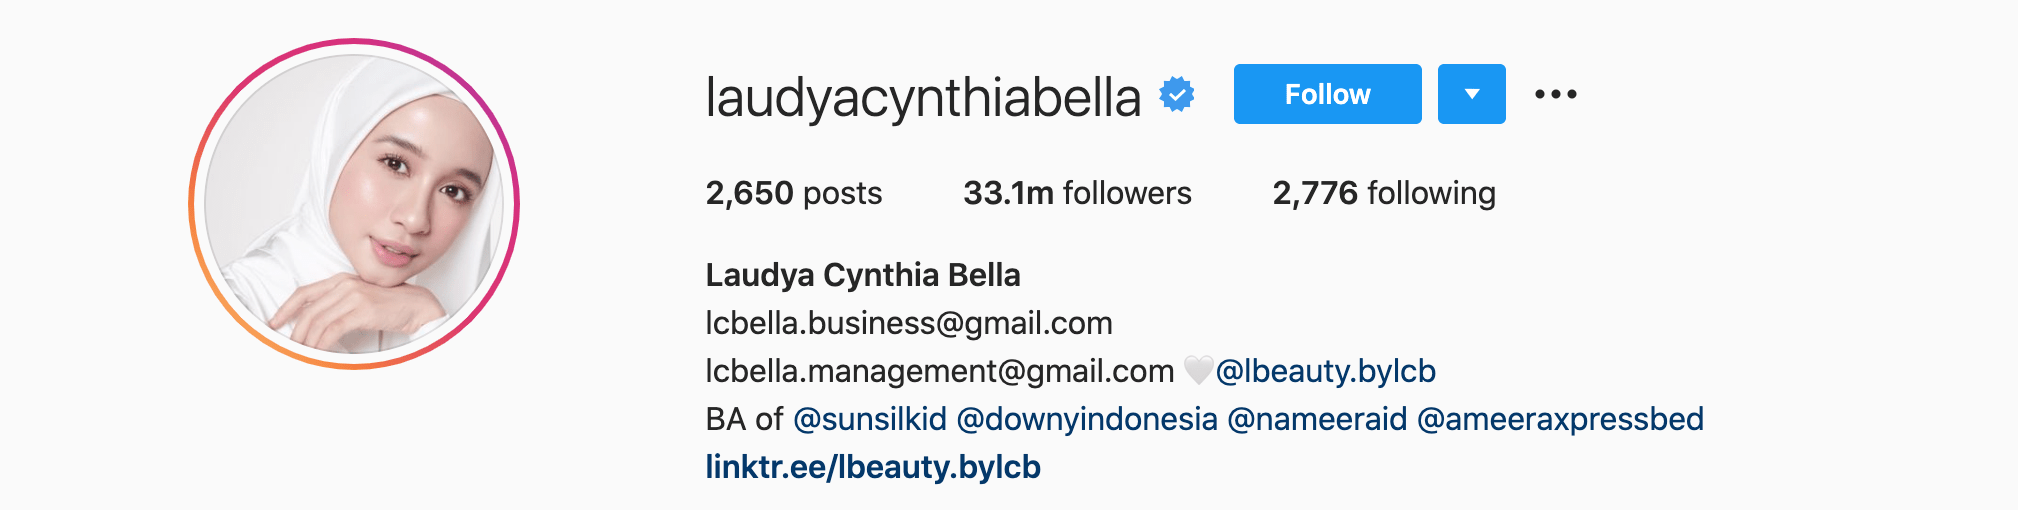 Top Instagram Influencers - LAUDYA CYNTHIA BELLA